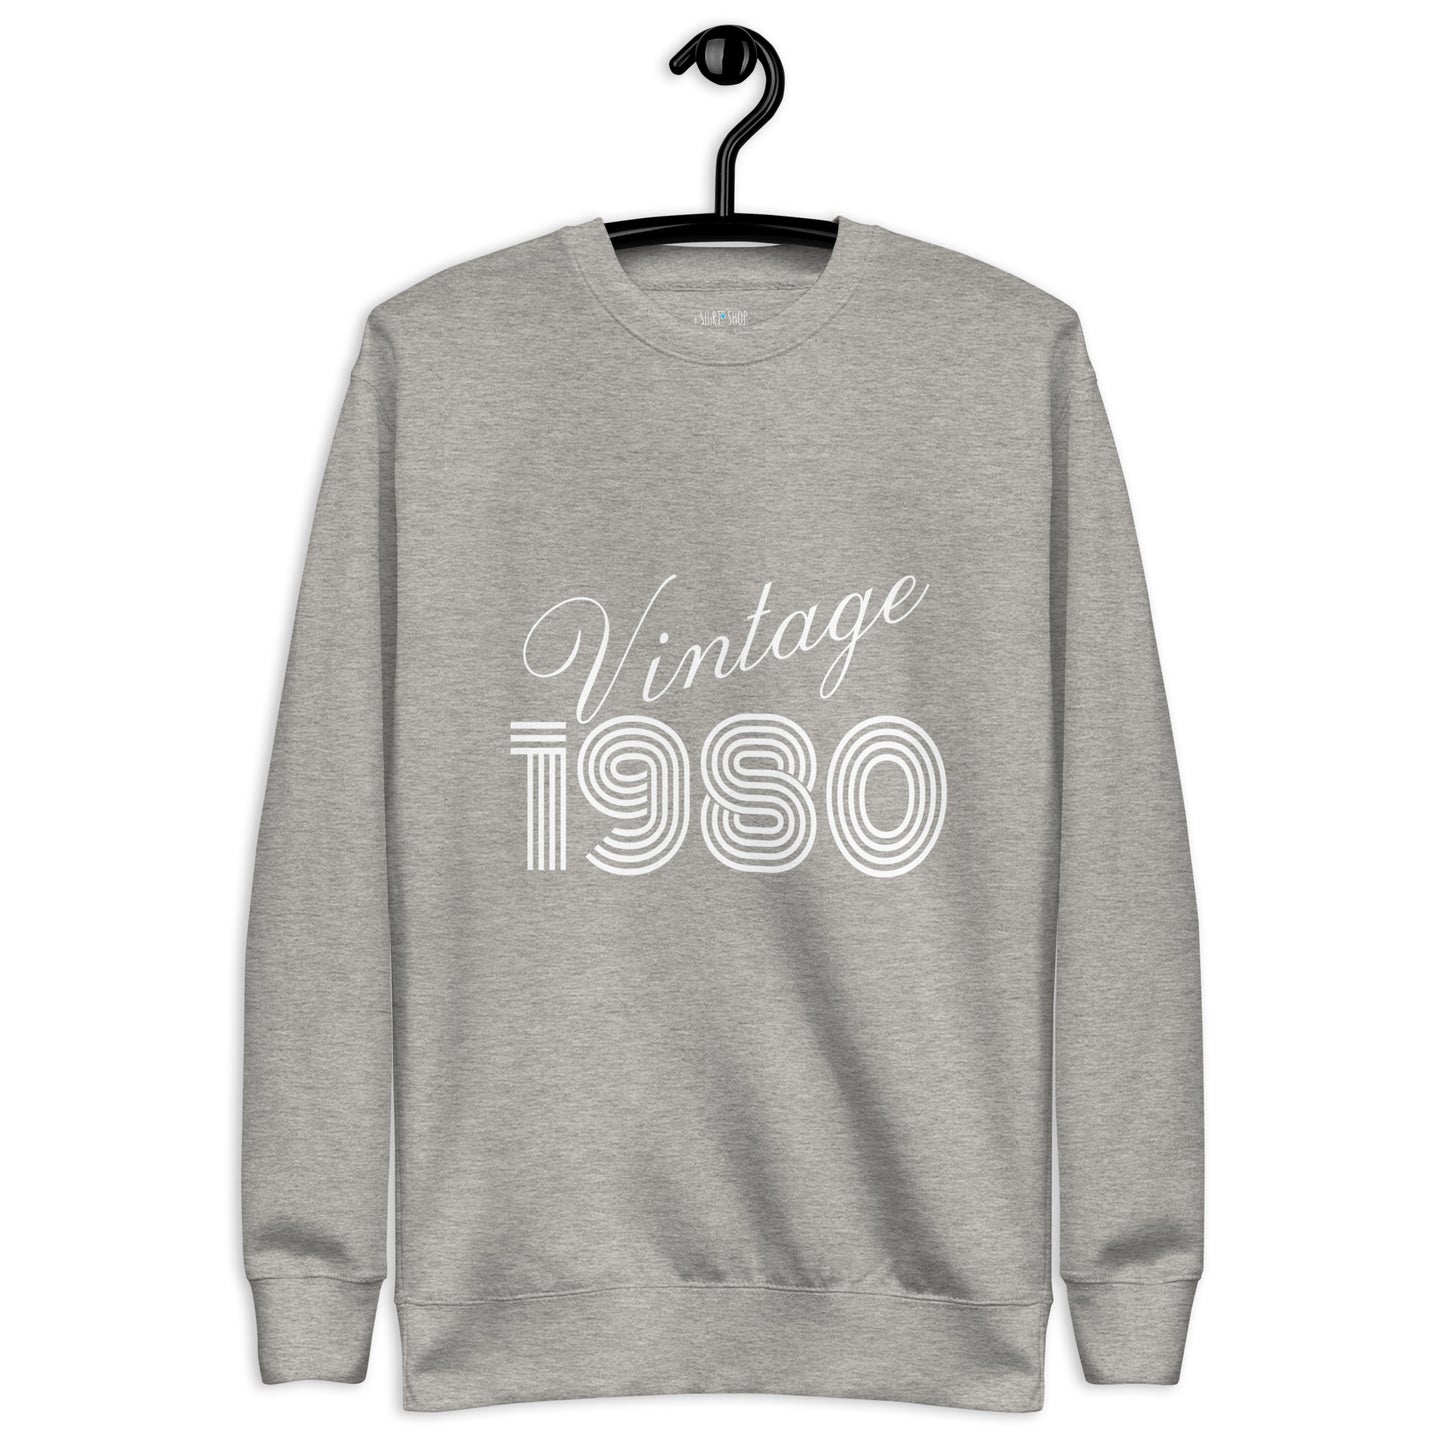 Vintage 1980..... Unisex Premium Sweatshirt